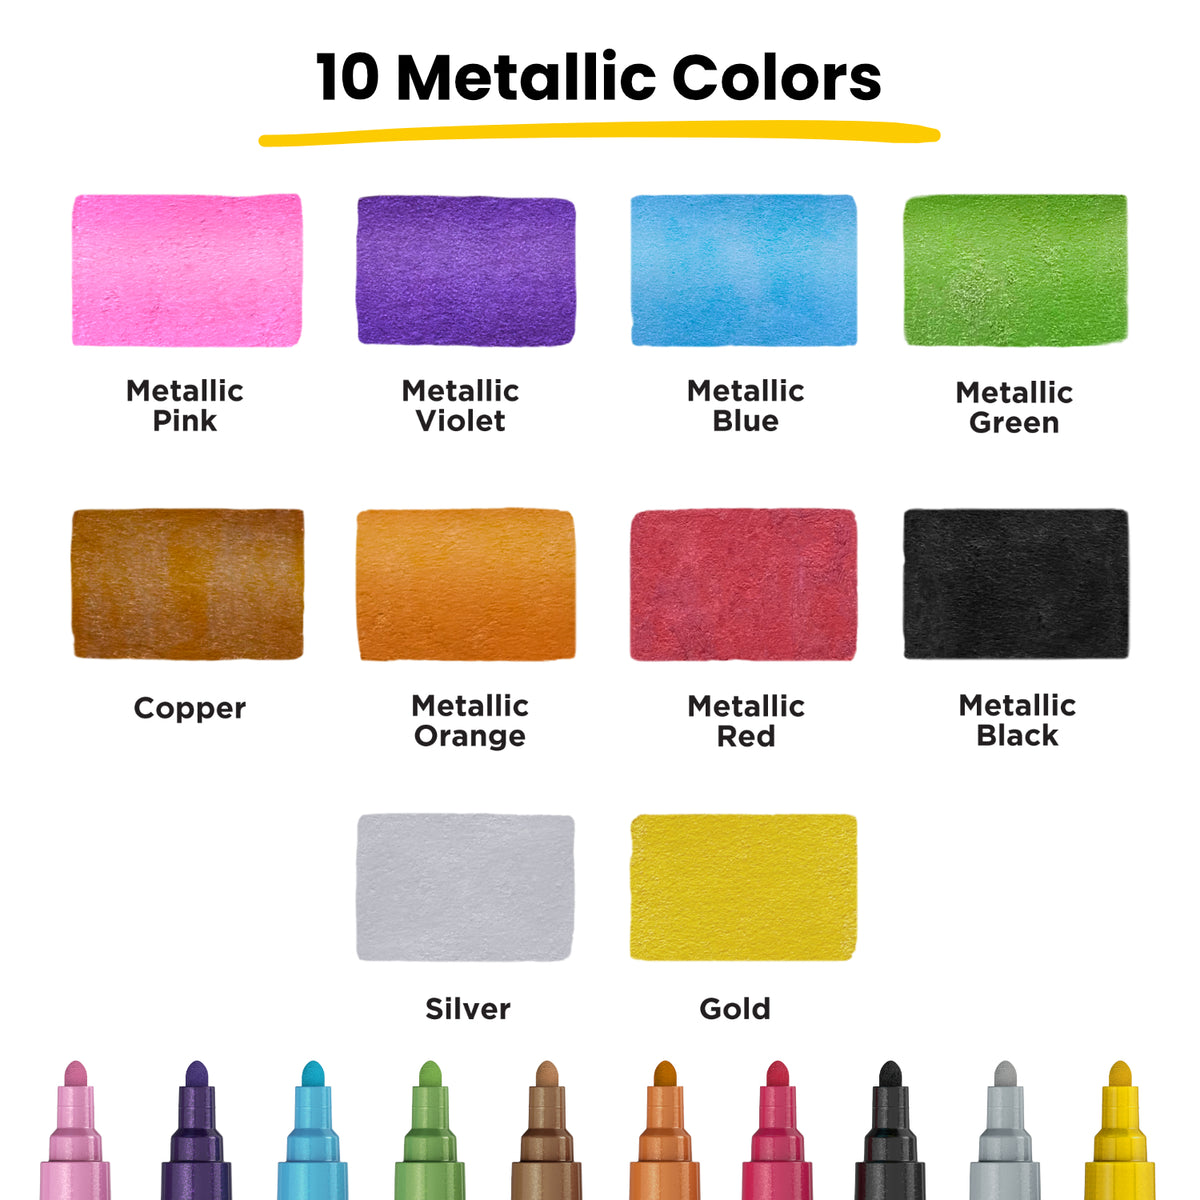 Metallic Chalk Markers - Reversible Nib | Pack of 10